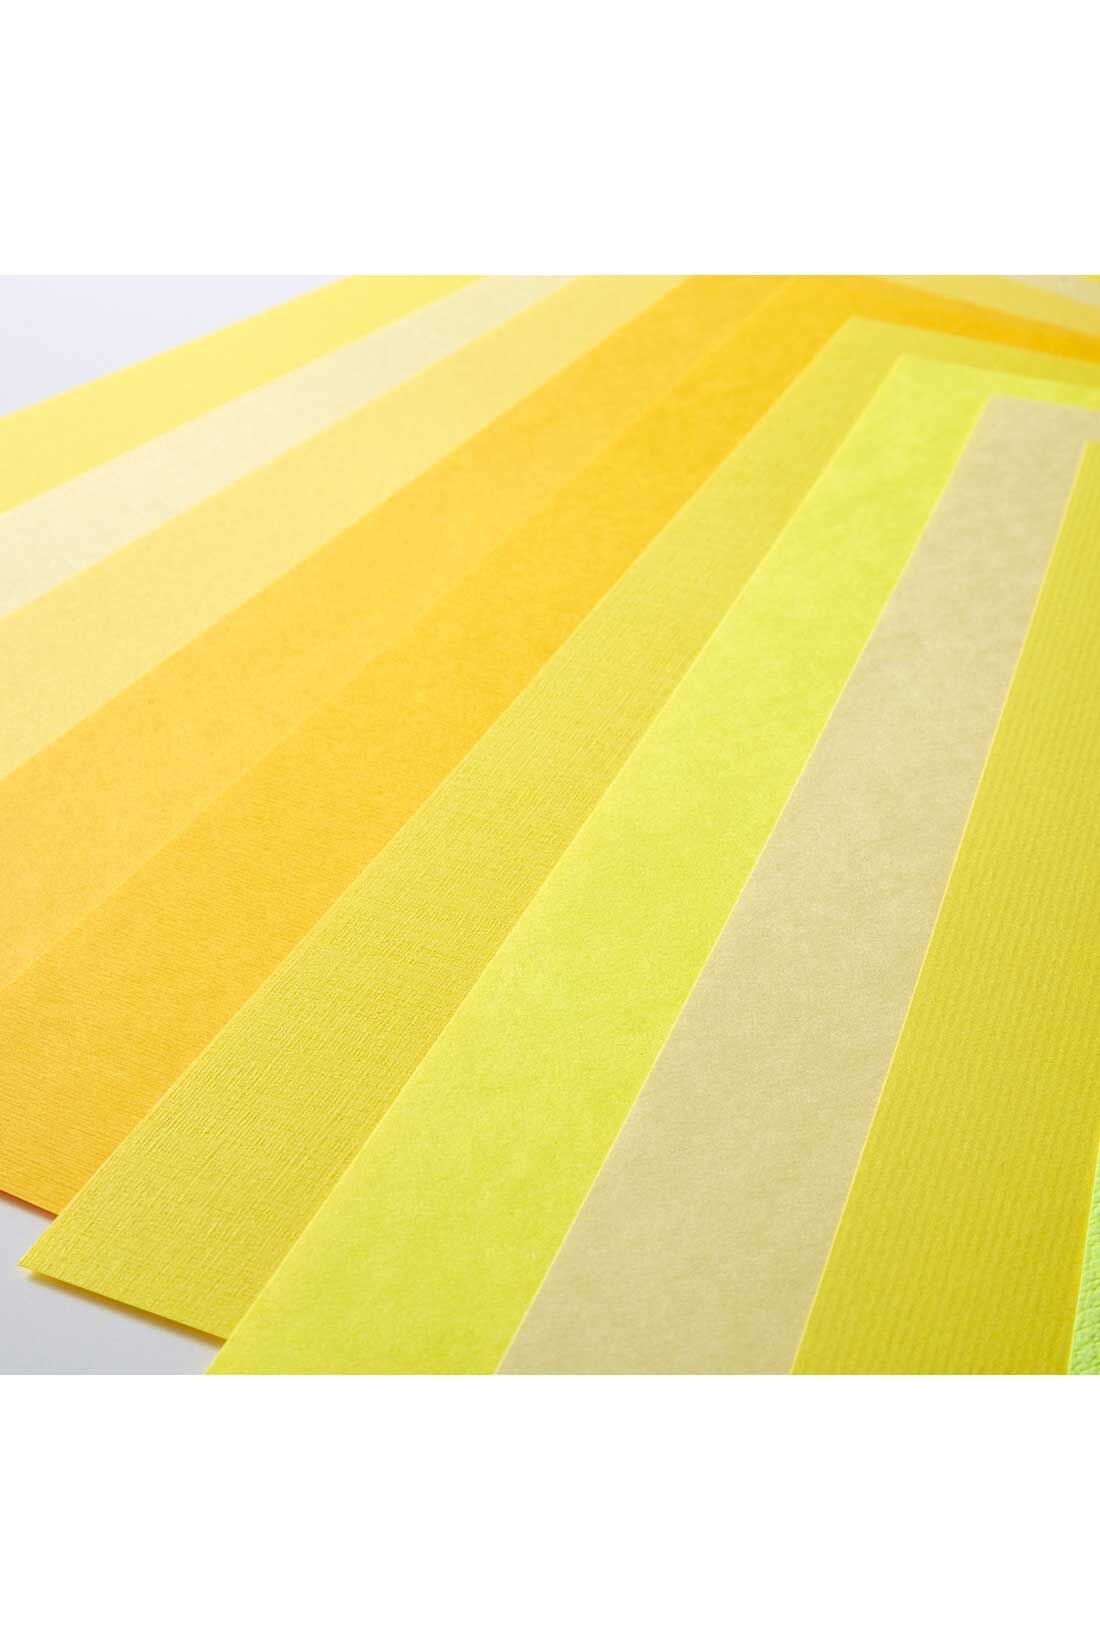 OSYAIRO|OSYAIRO 紙の専門商社竹尾が選ぶ　色を楽しむ紙セットの会〈黄〉|表情豊かな紙の世界。色と一緒に楽しんでください。